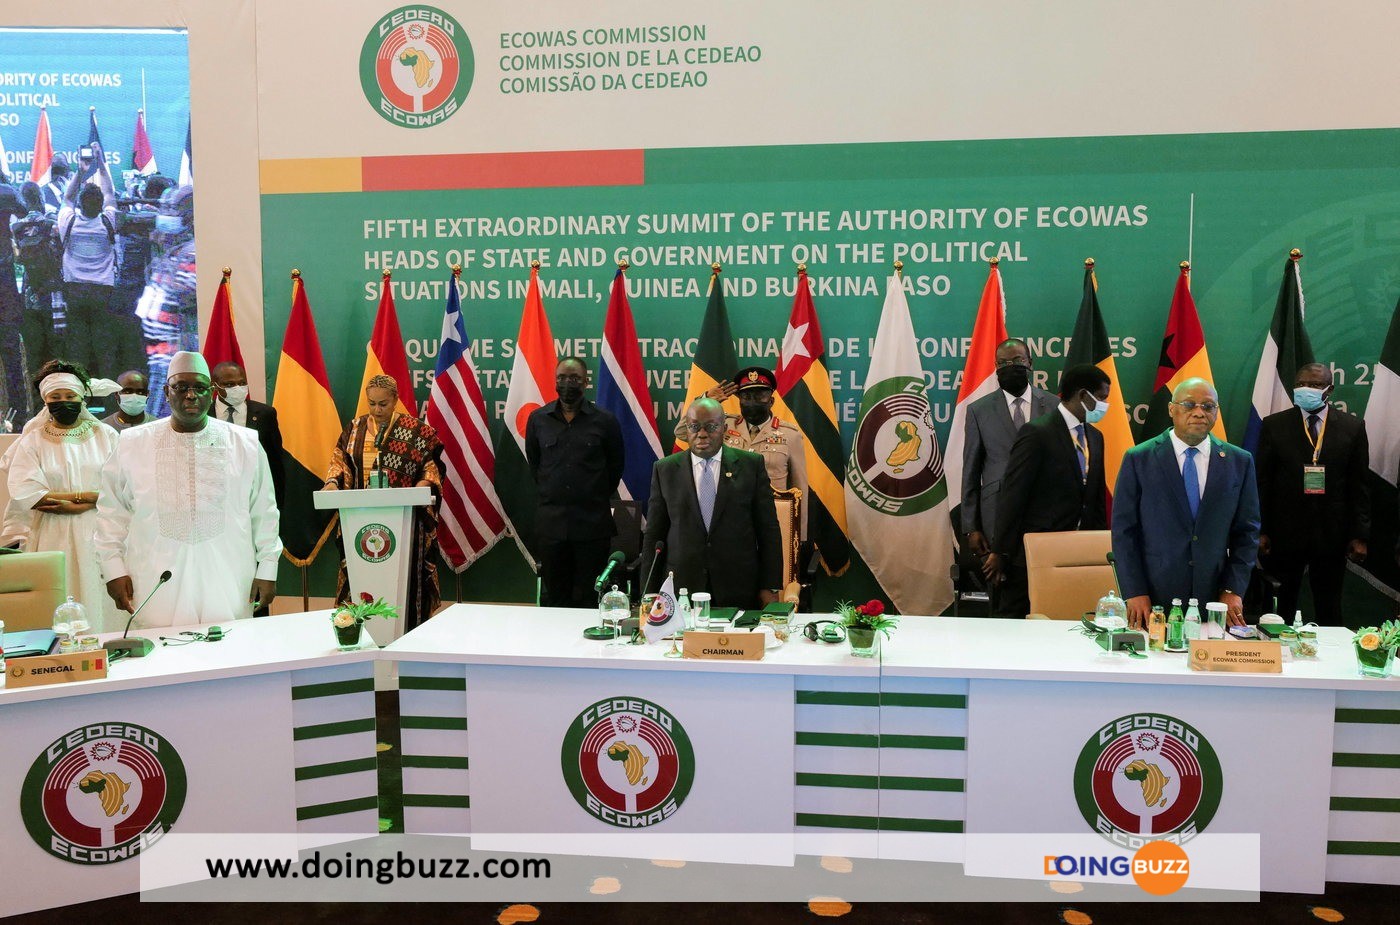 Mali-Guinea-Burkina Federation: ECOWAS rejects the project